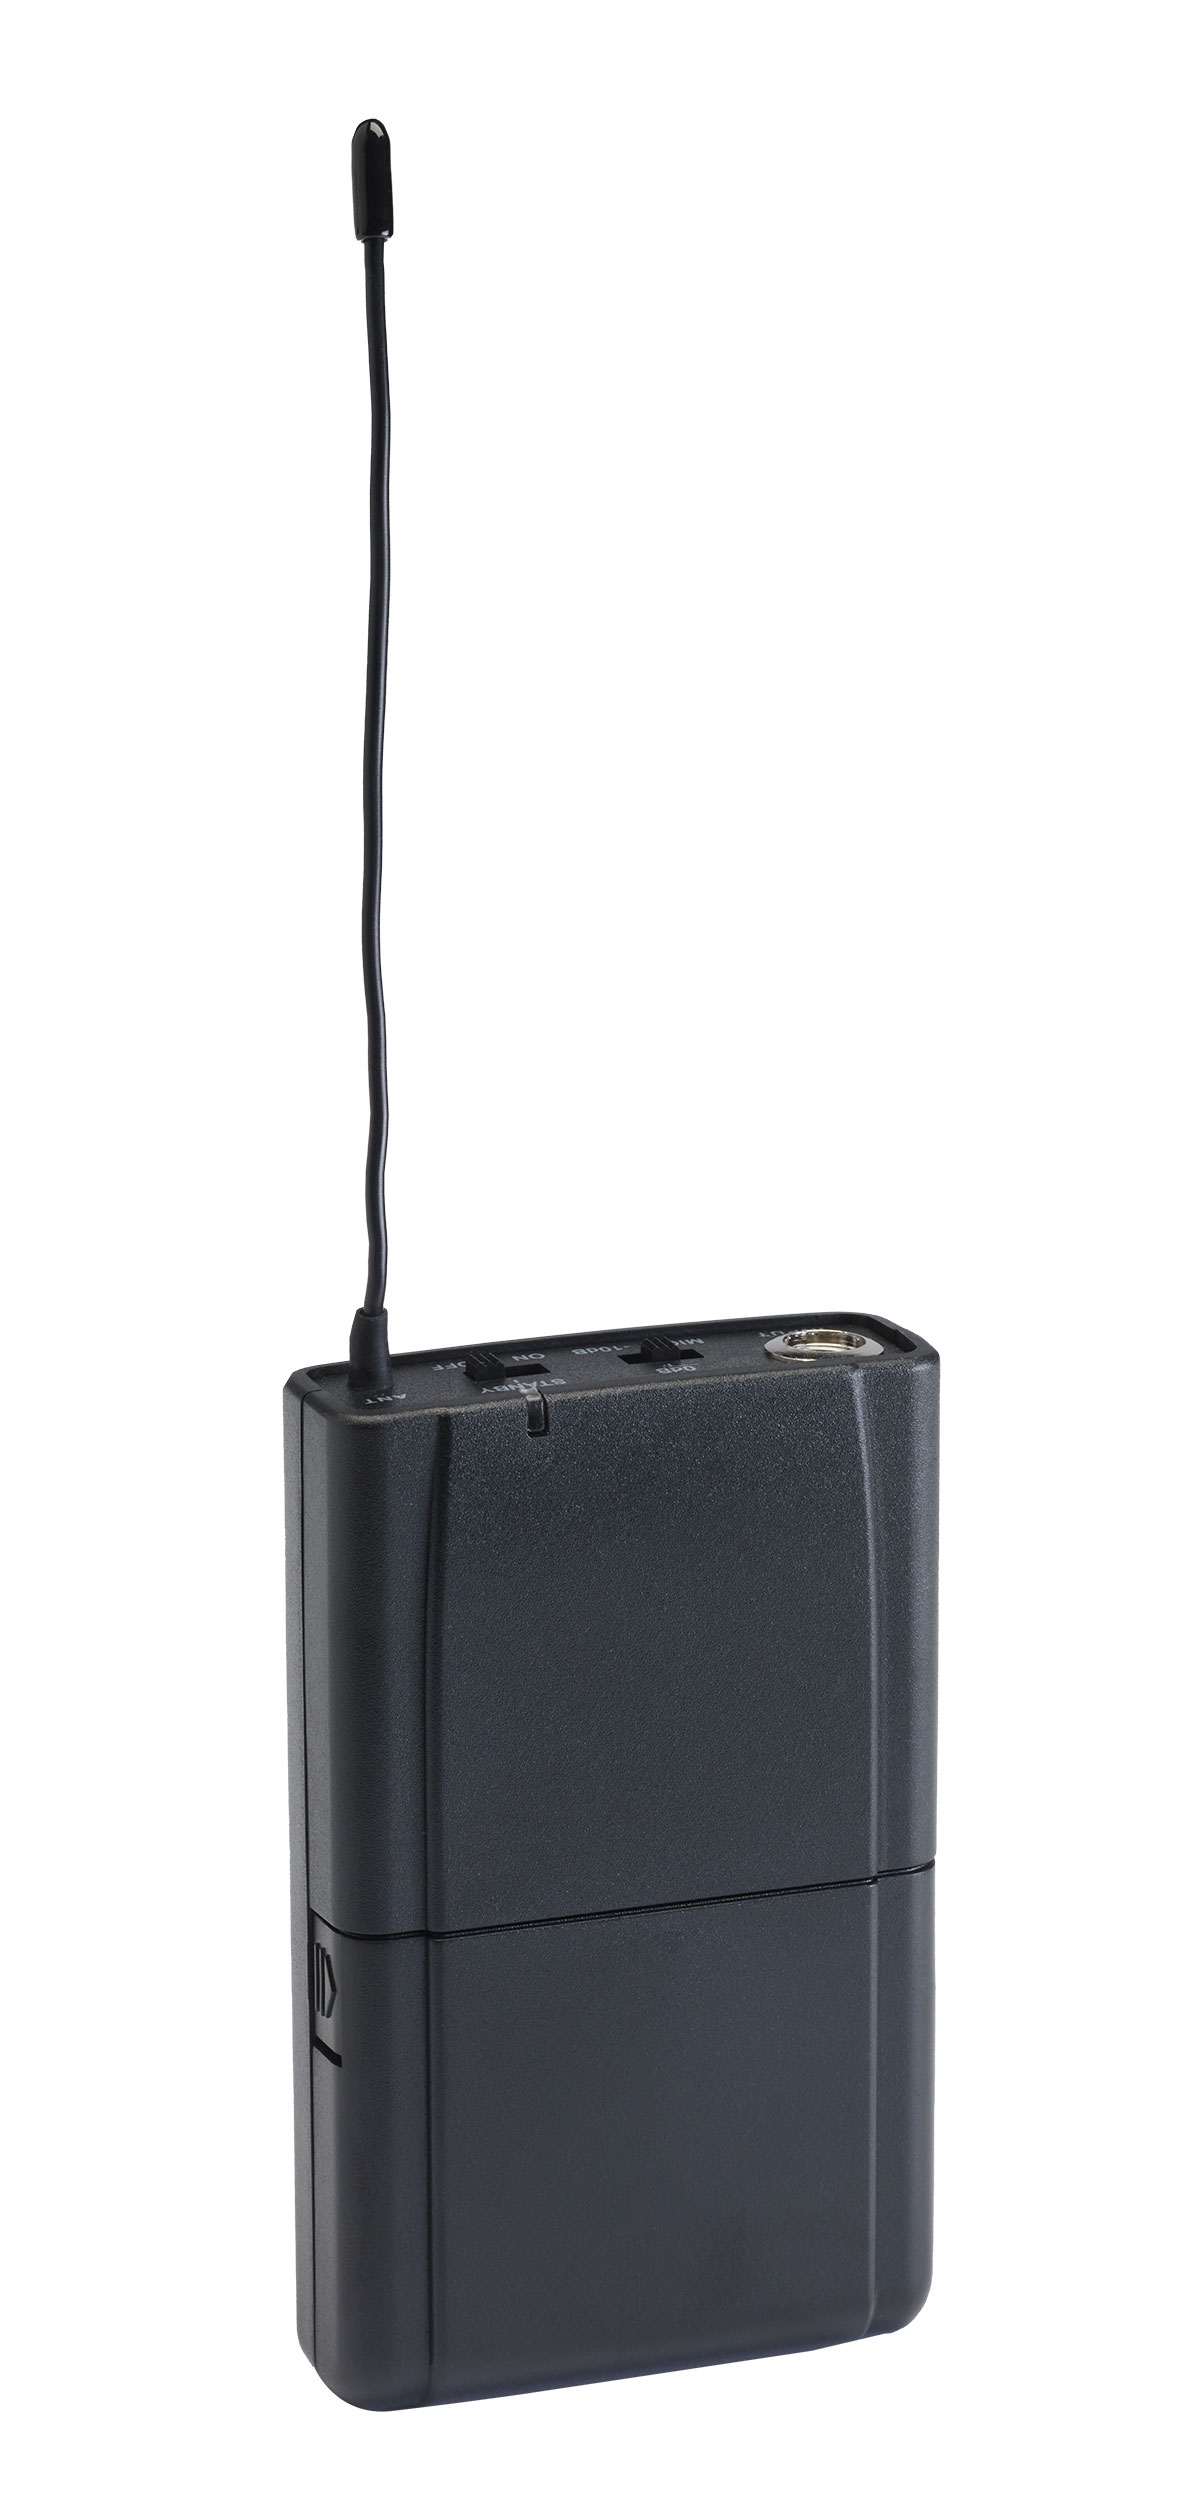 UHF Headset Transmitter for portable sound system - 500MHz